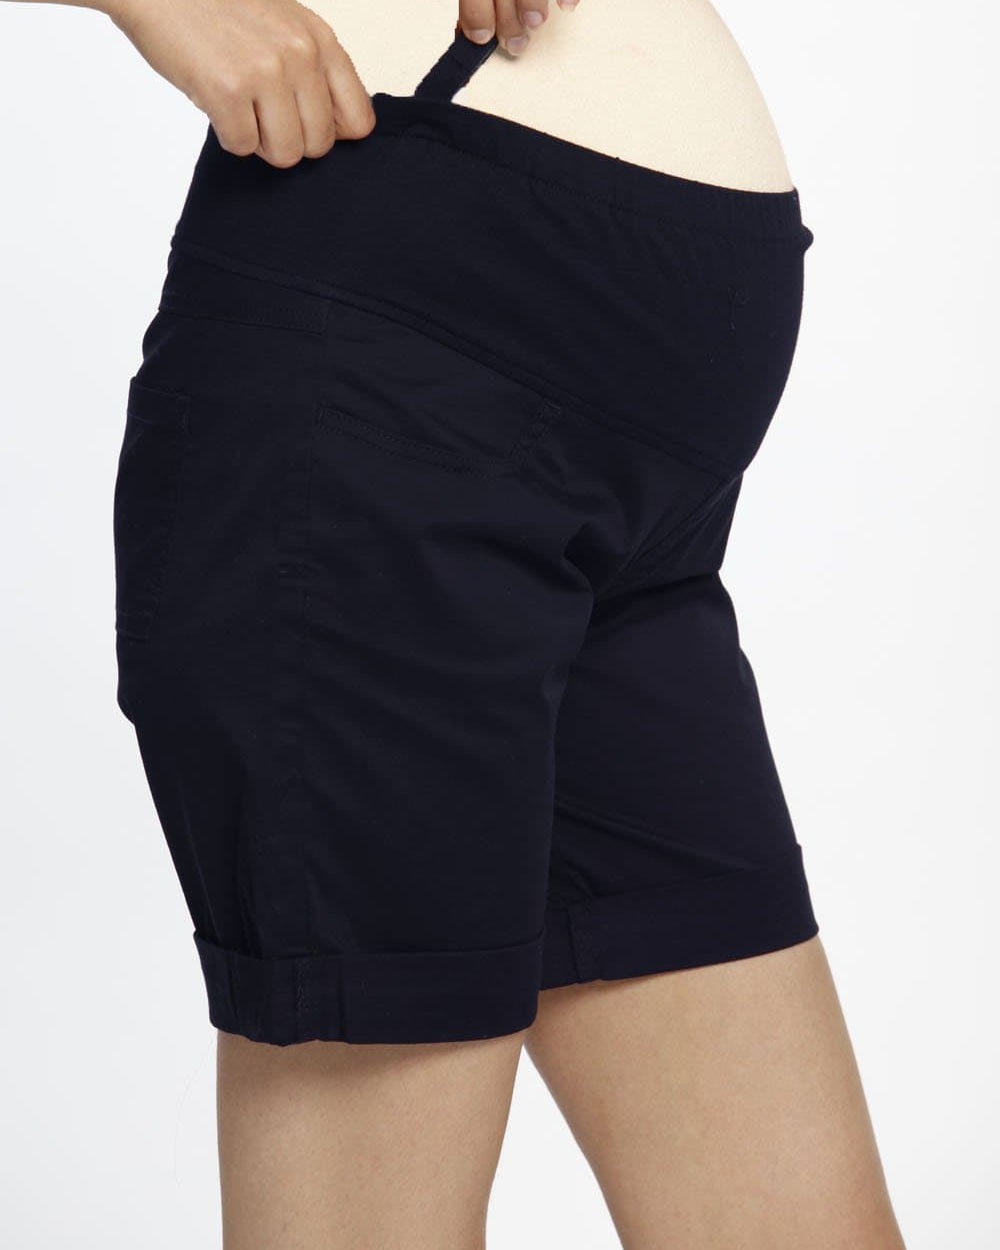 Cotton Maternity Summer Shorts in Navy pregnancy shorts (1573893865575)